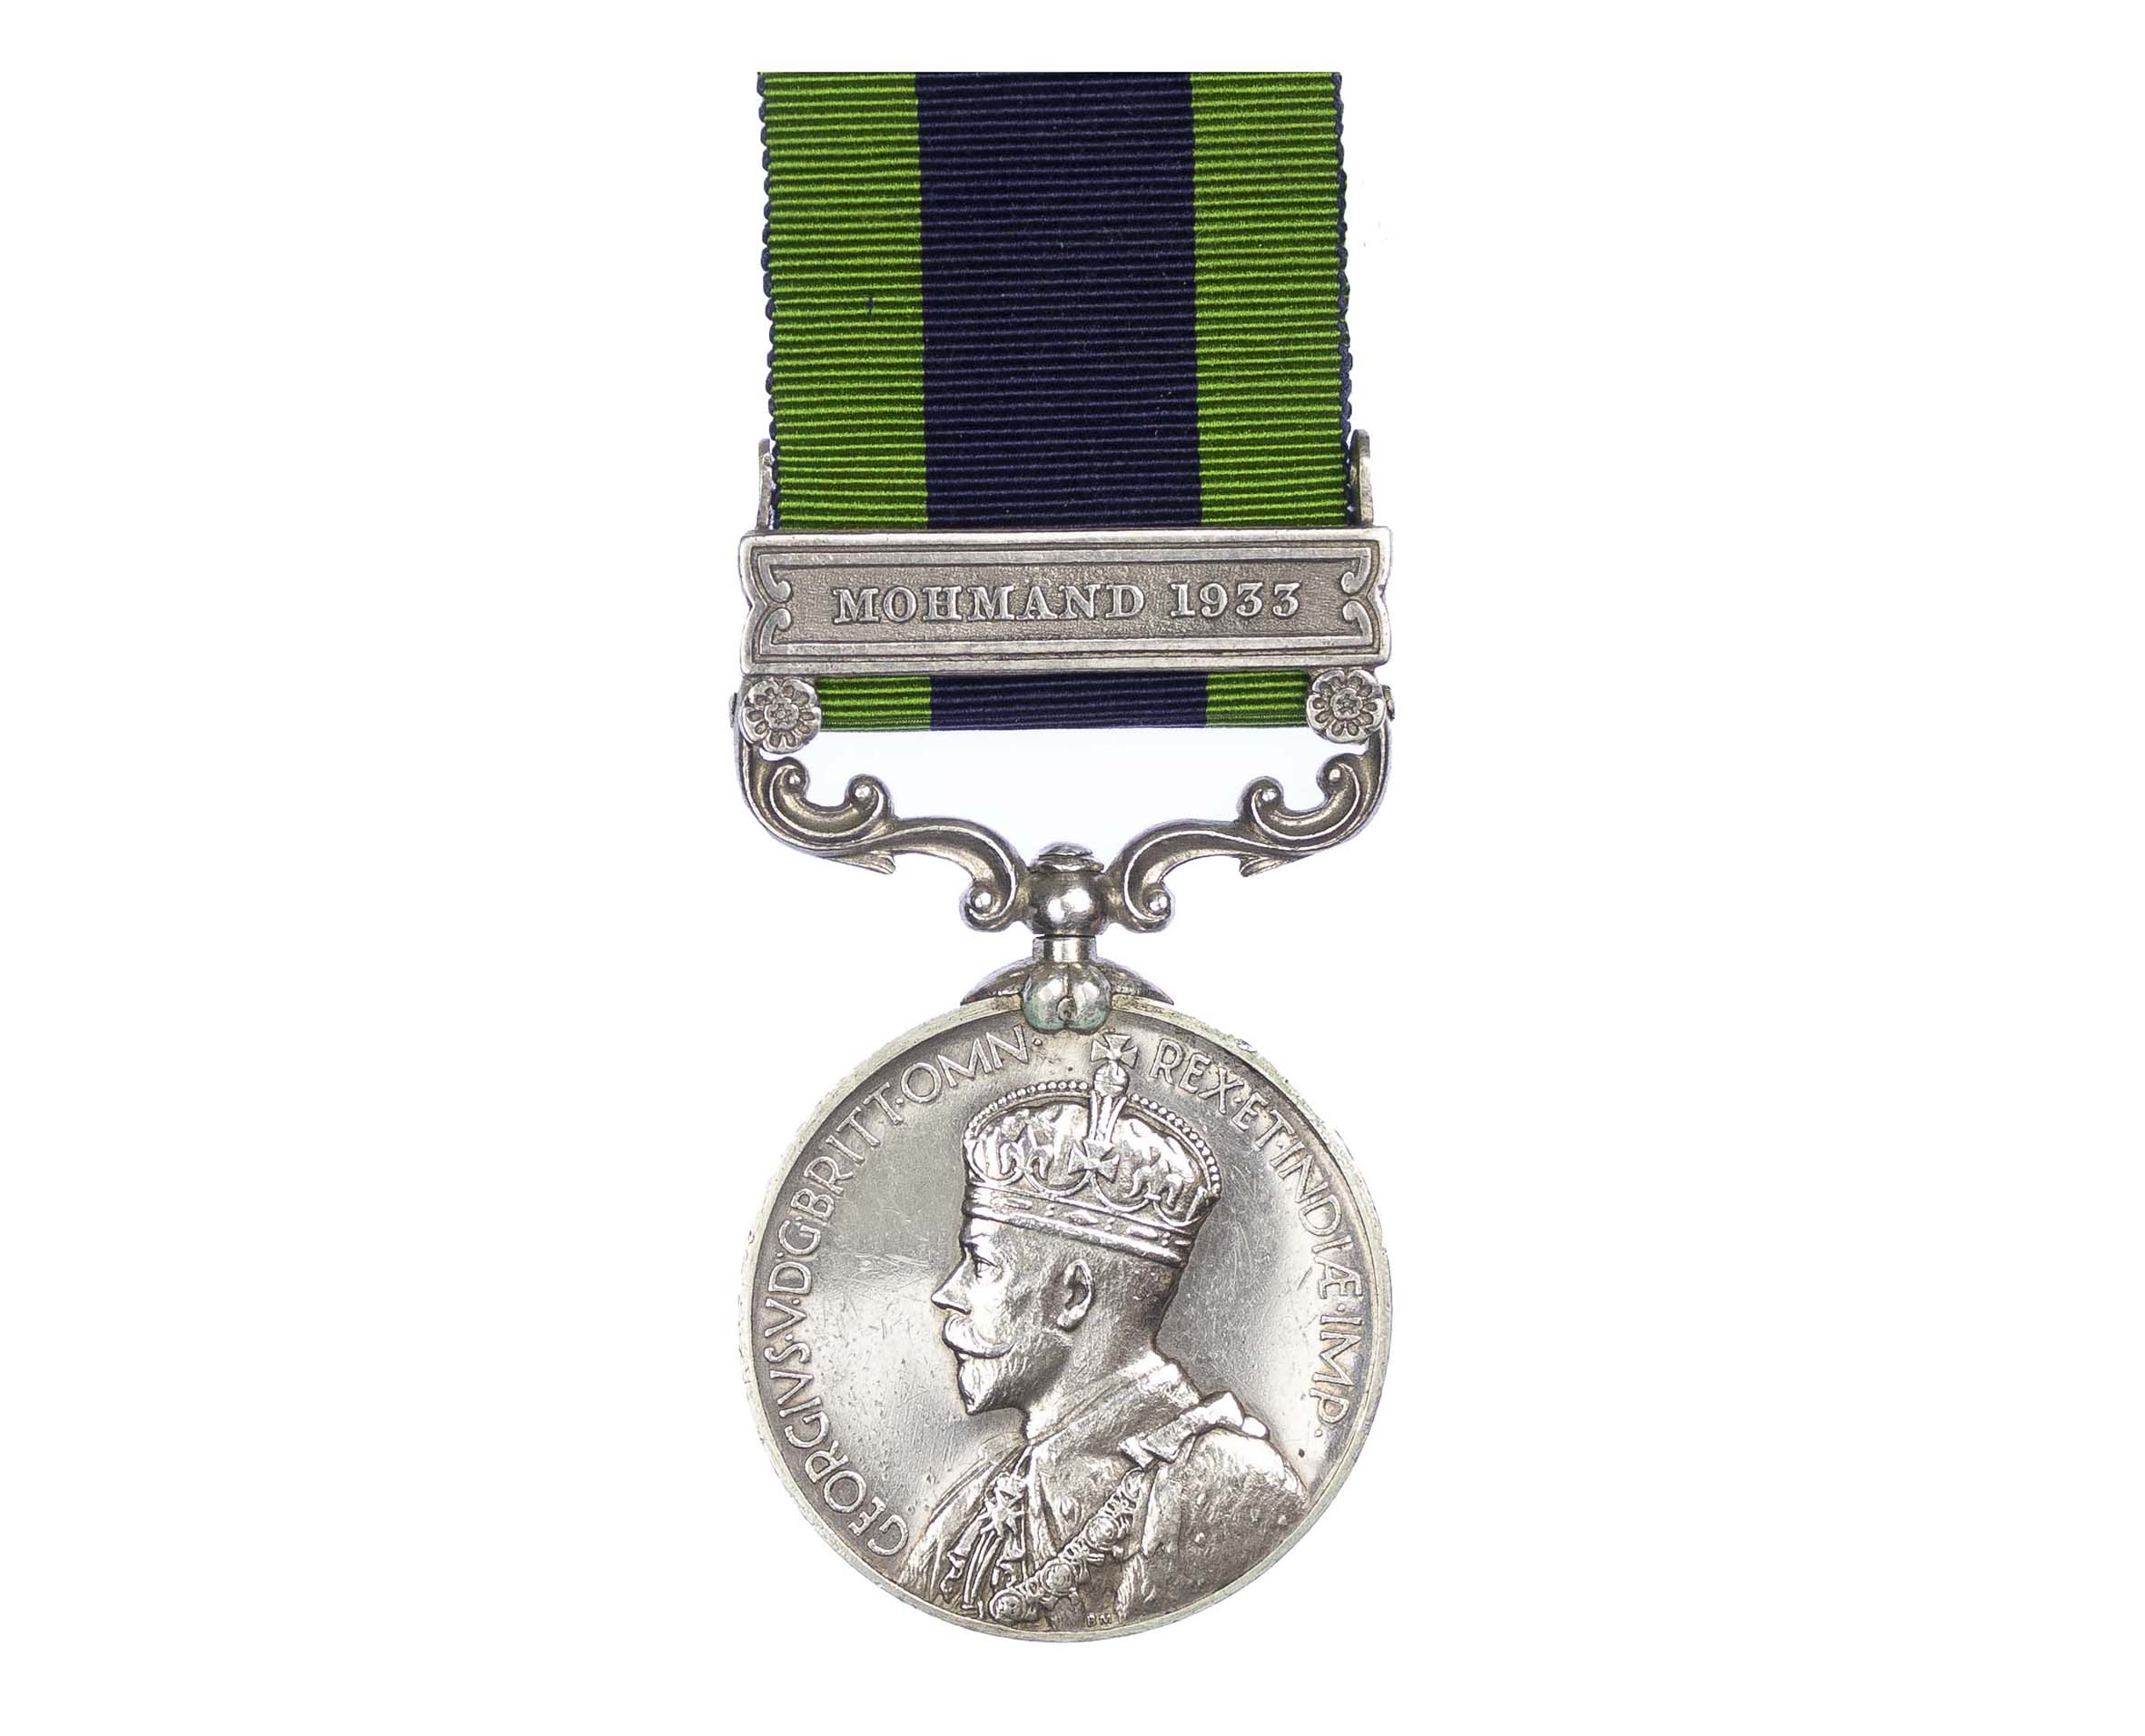 India General Service Medal, one clasp, Mohmand 1933, to Mohr Habibur Rahman